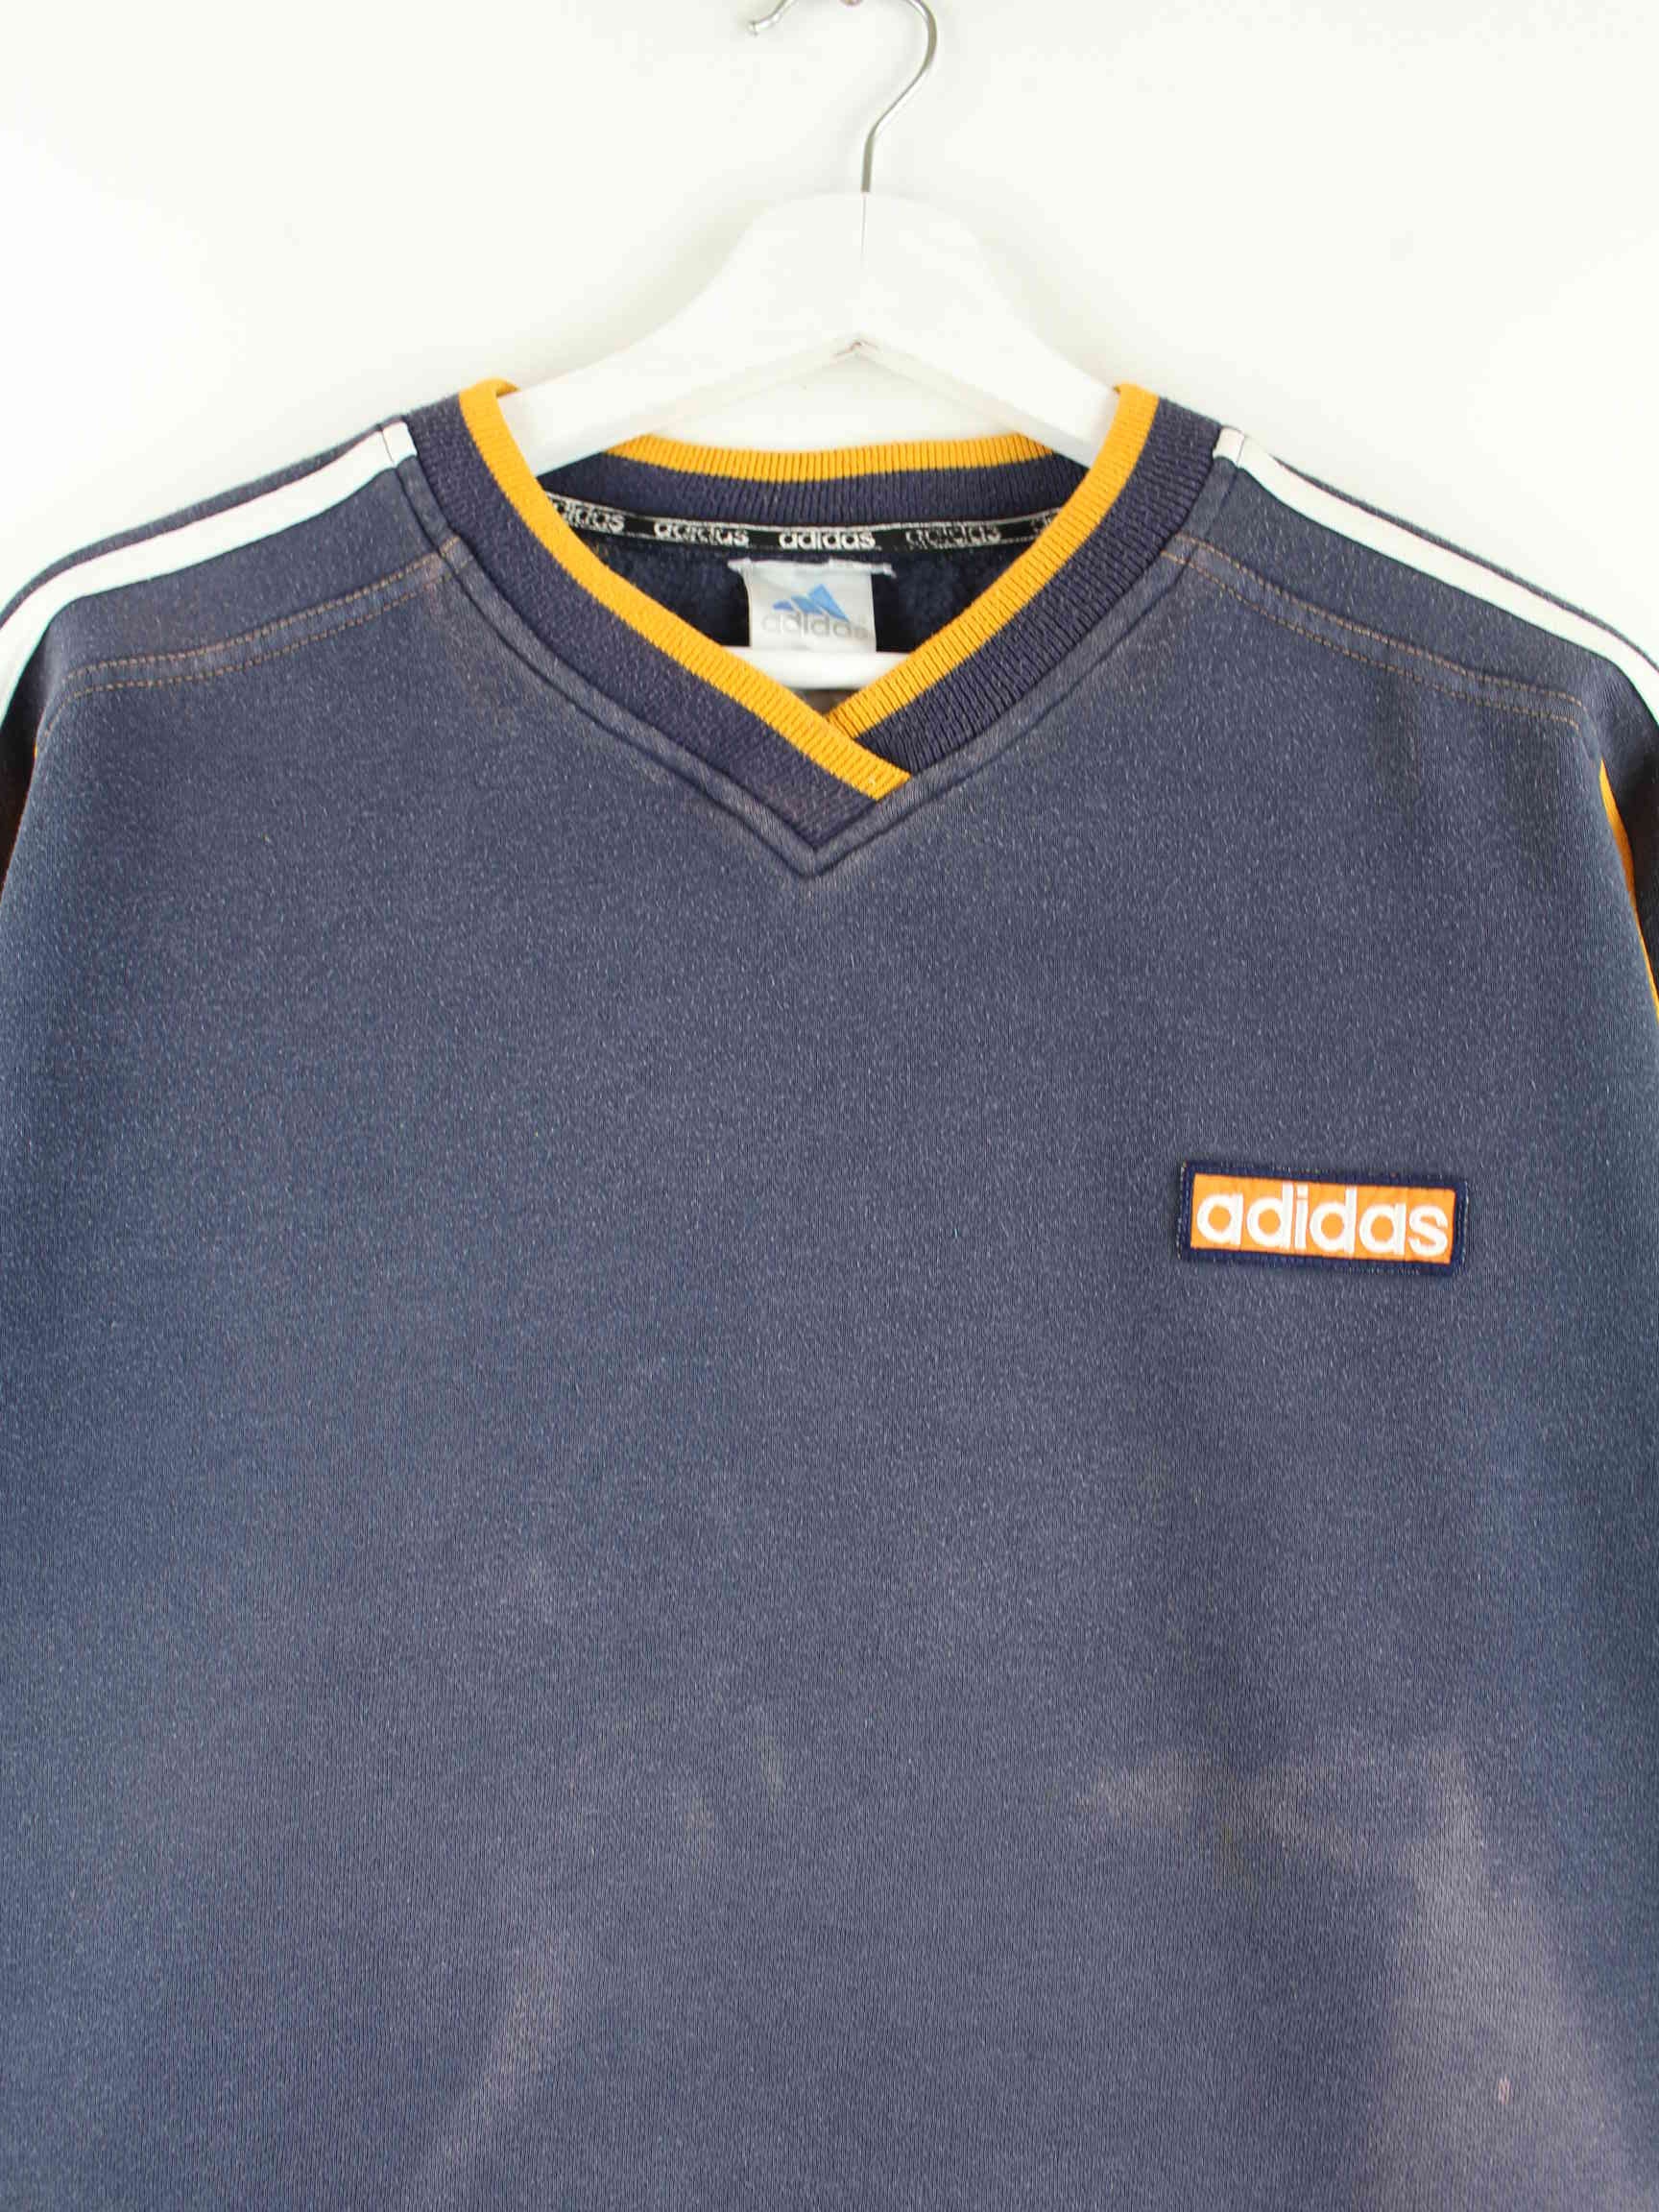 Adidas 90s Vintage Performance 3-Stripes Sweater Blau S (detail image 1)